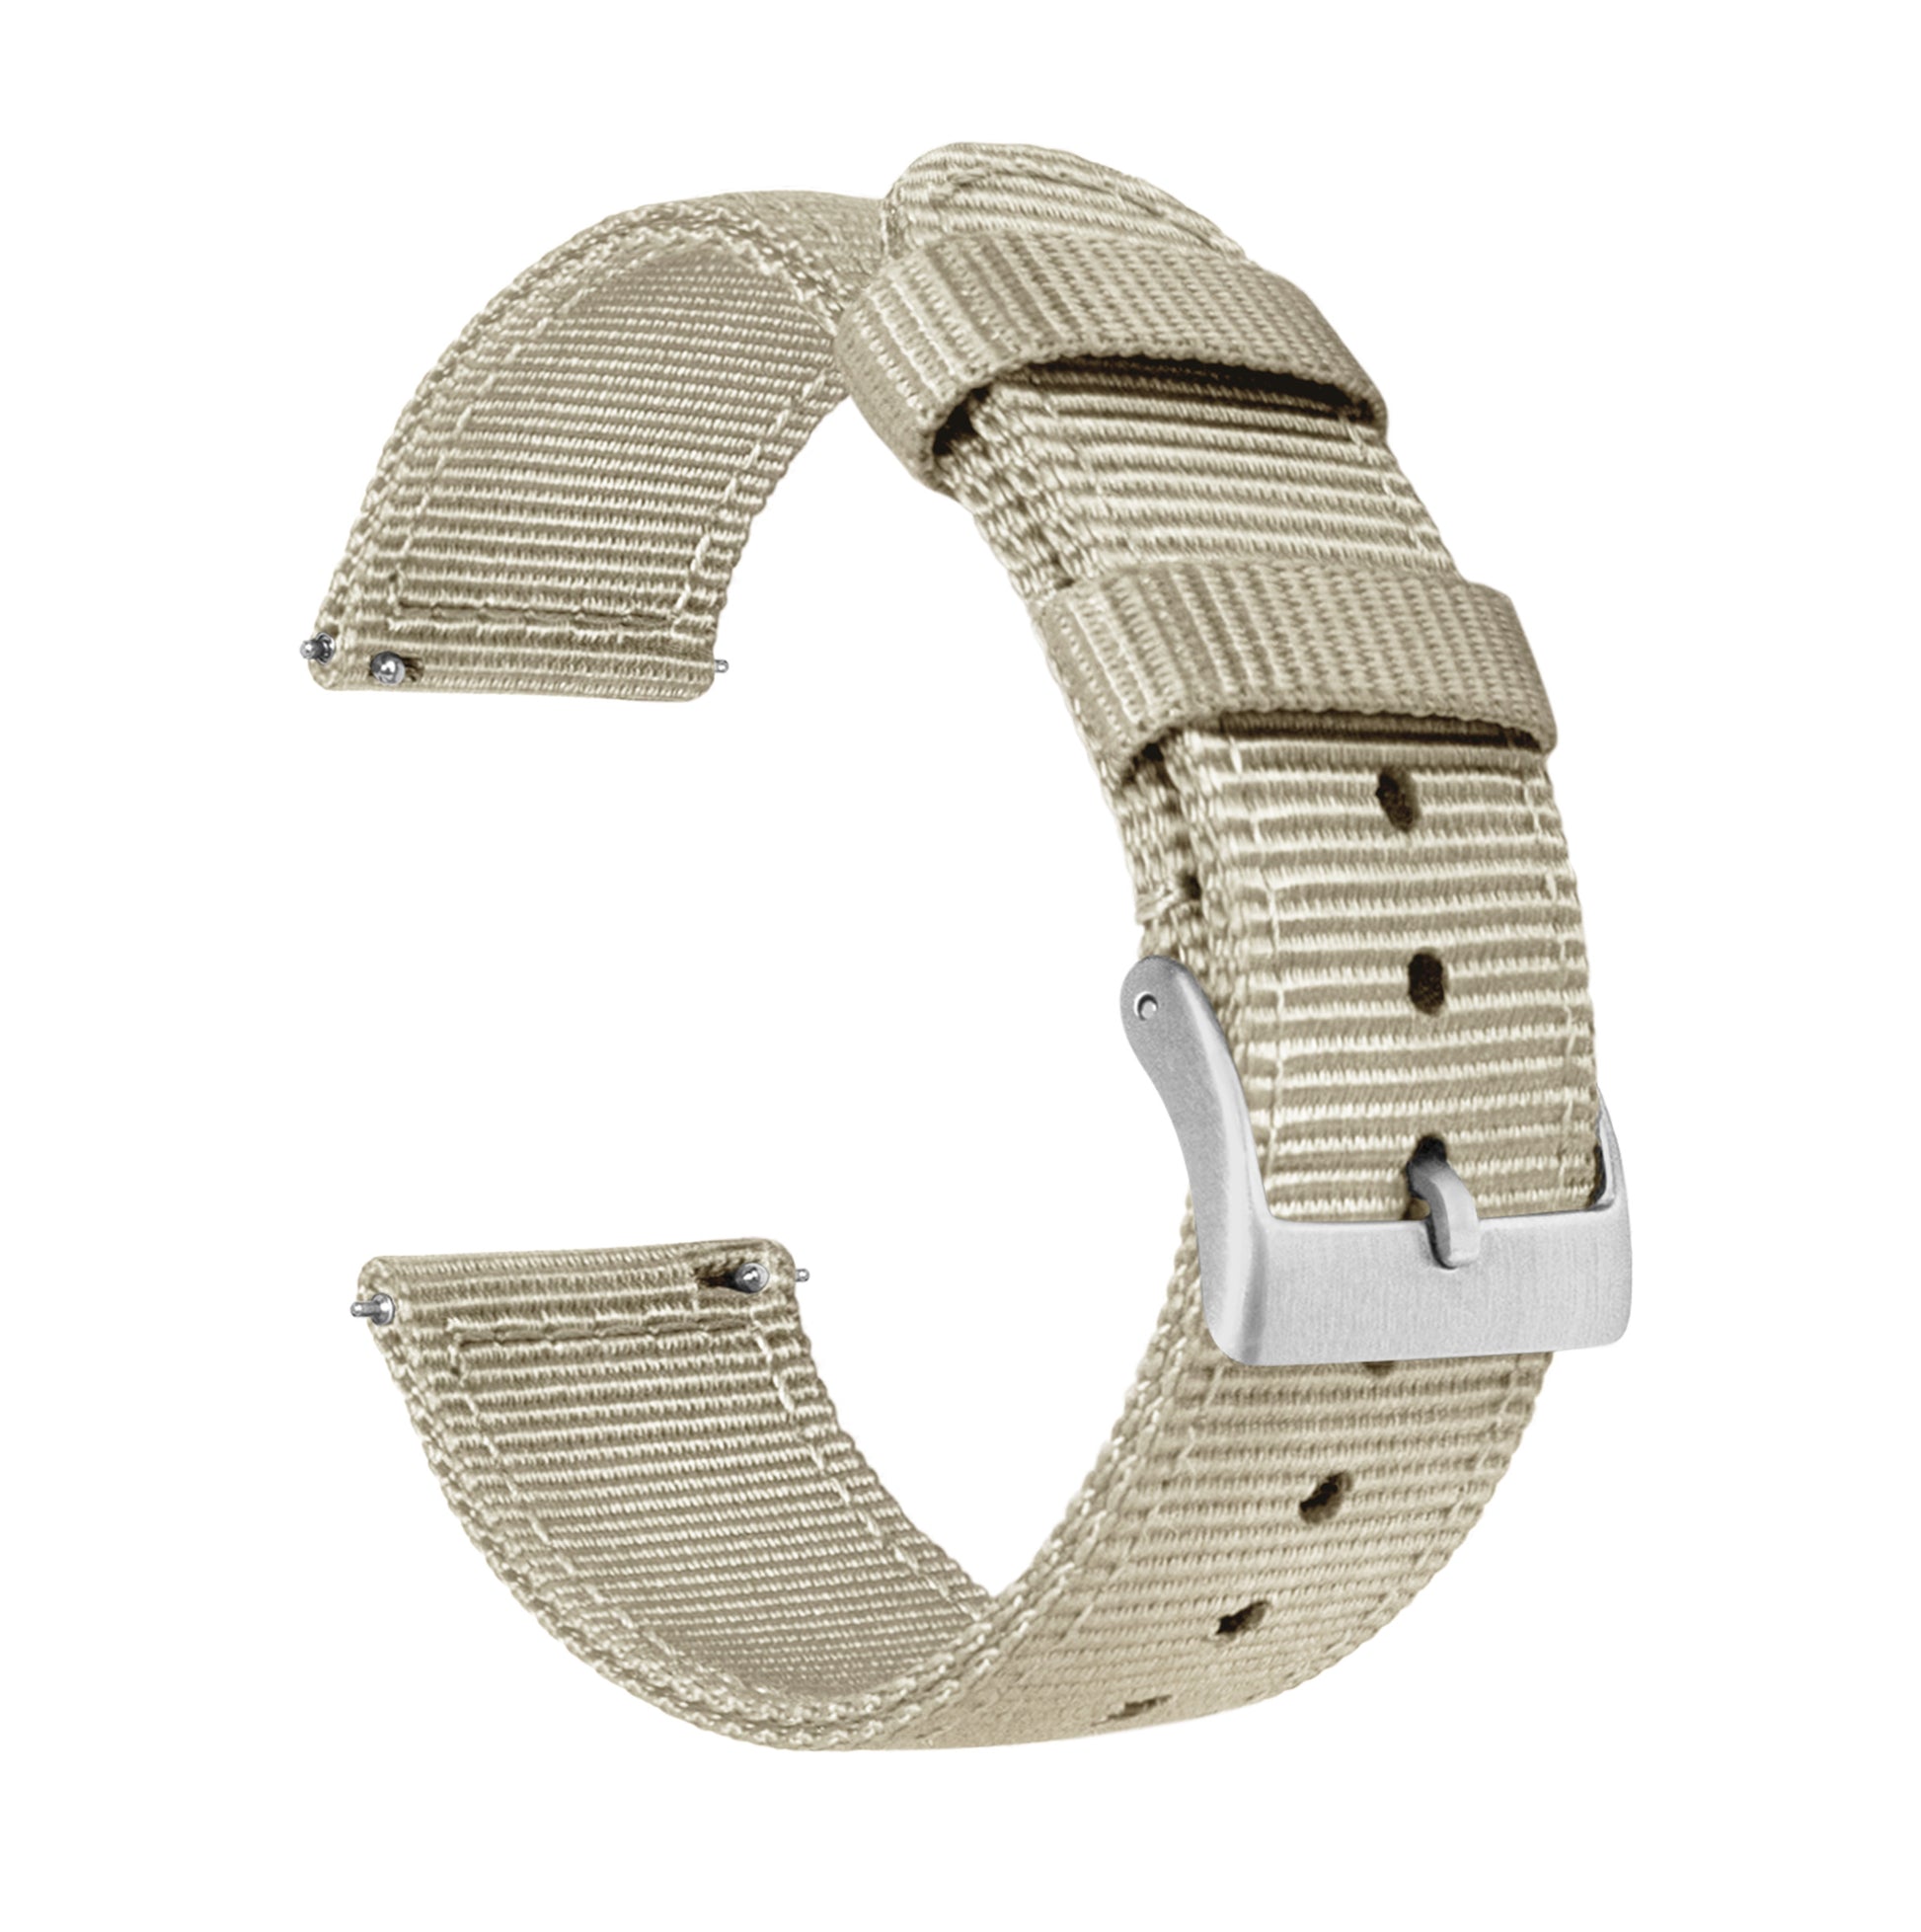 Samsung Galaxy Watch3 | Two-Piece NATO Style | Khaki Tan - Barton Watch Bands